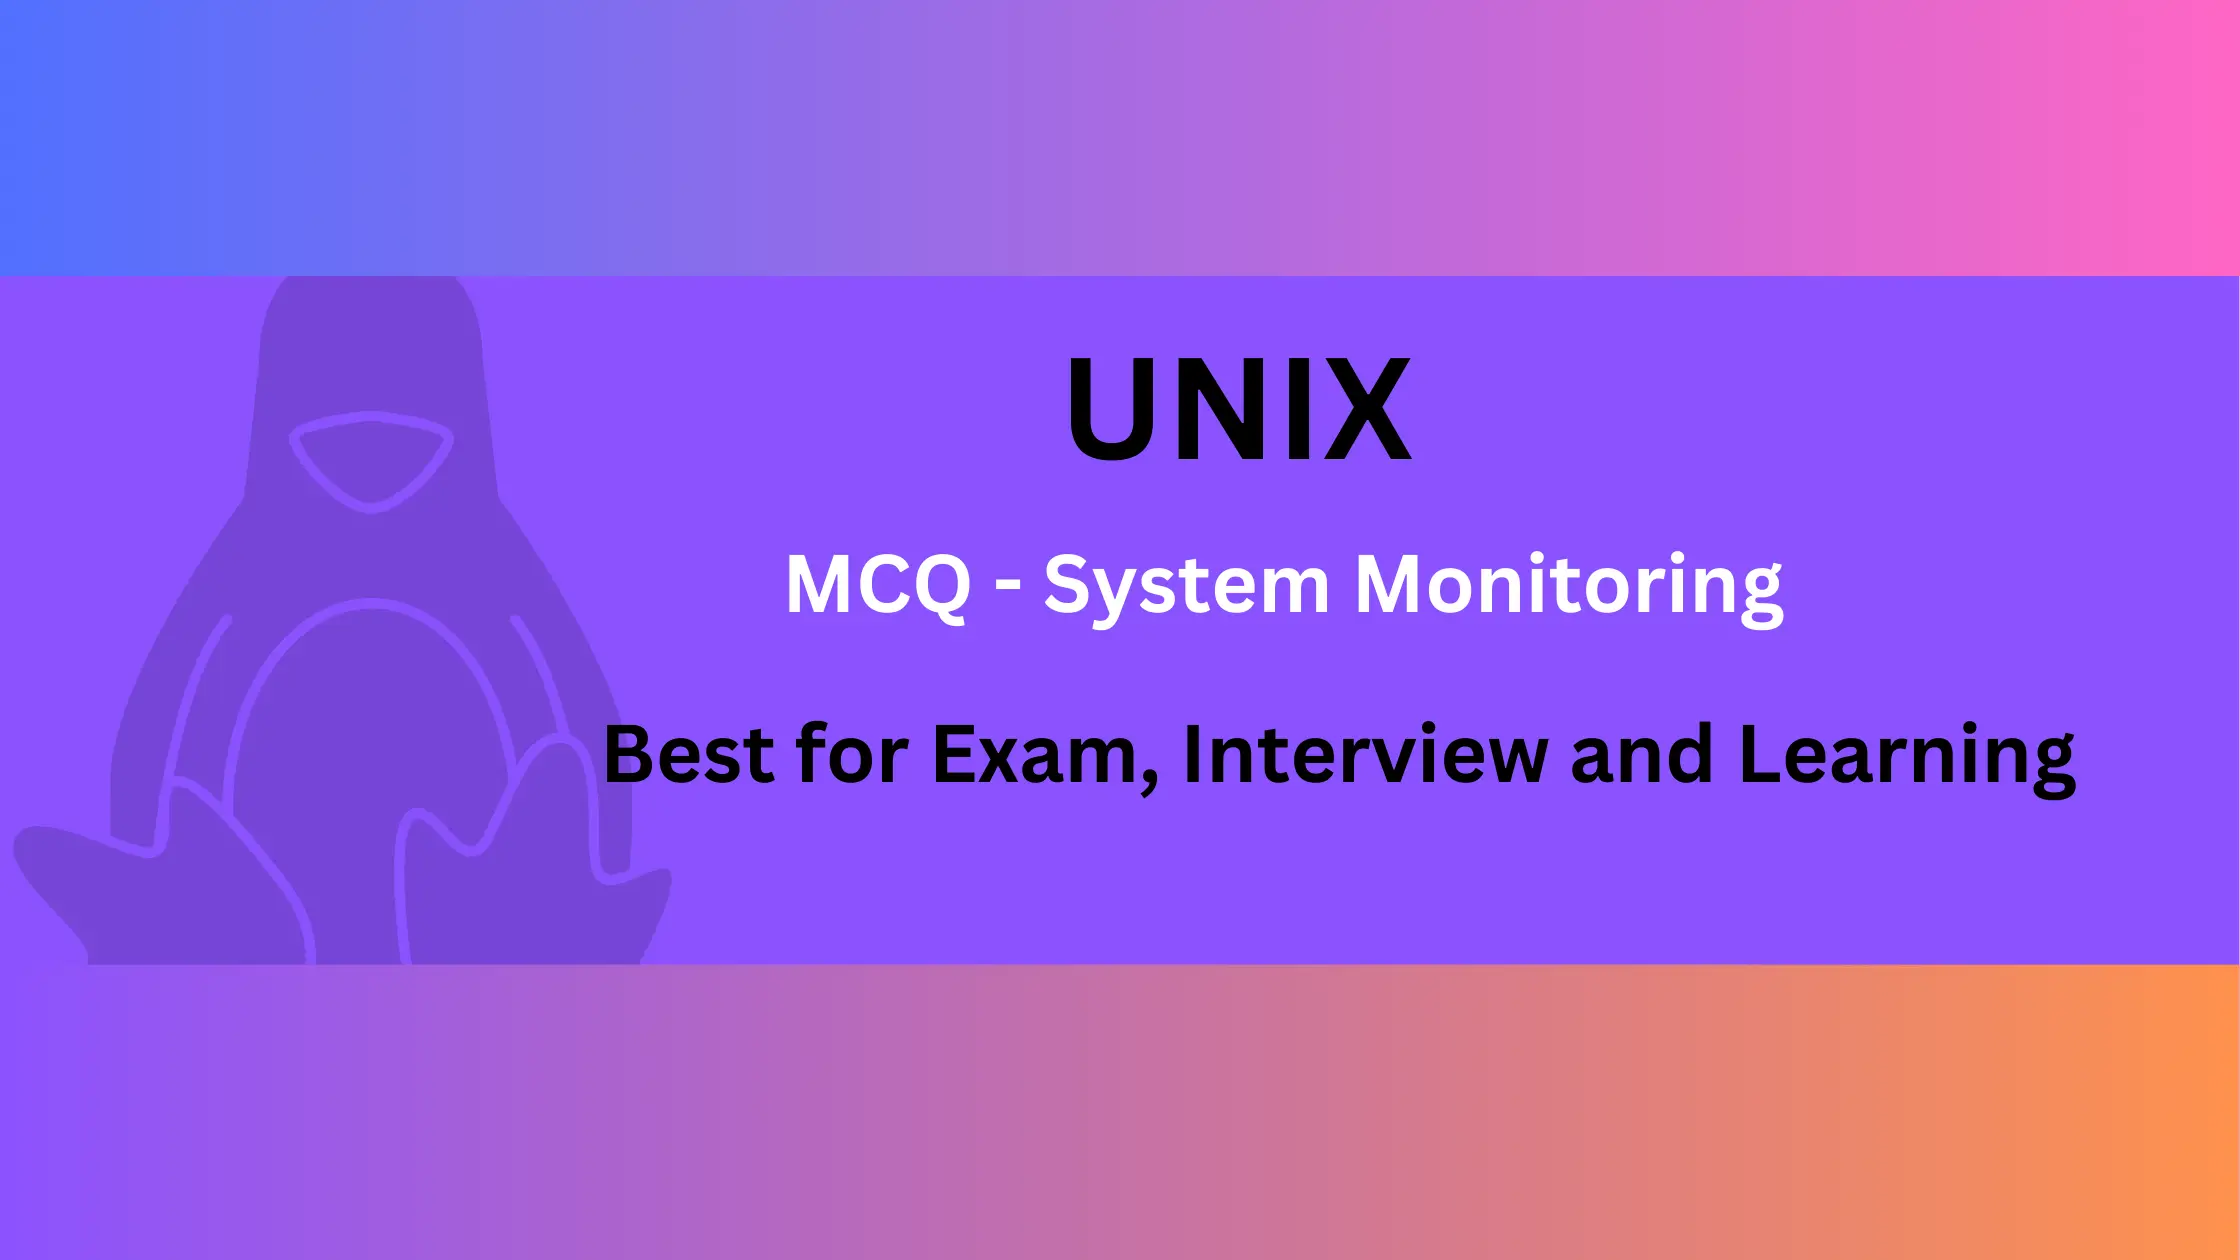 UNIX MCQ System Monitoring